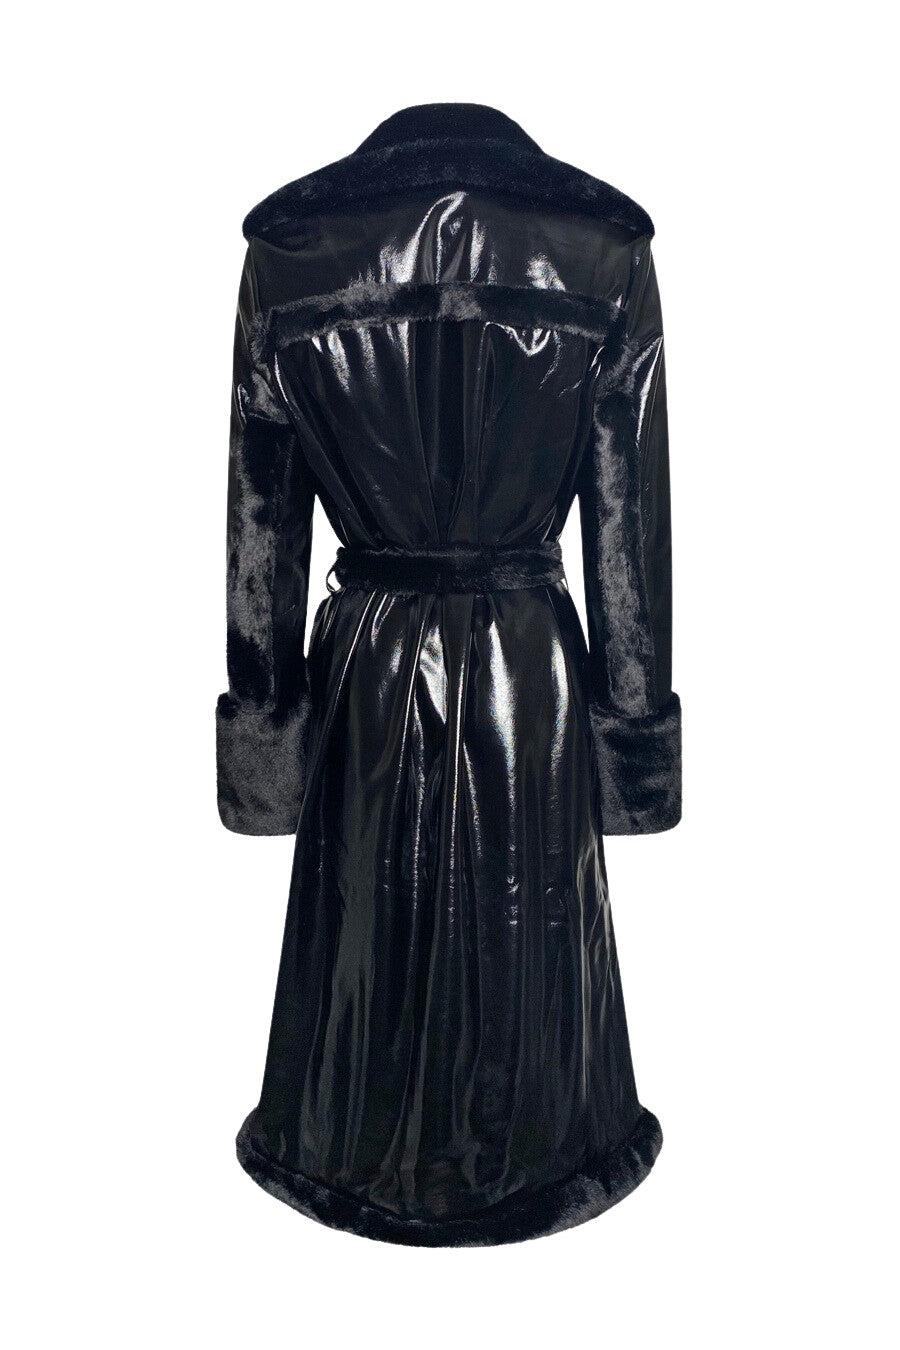 "KNOCTURNAL" Black Patent Leather & Black Vegan Fur Trench Coat